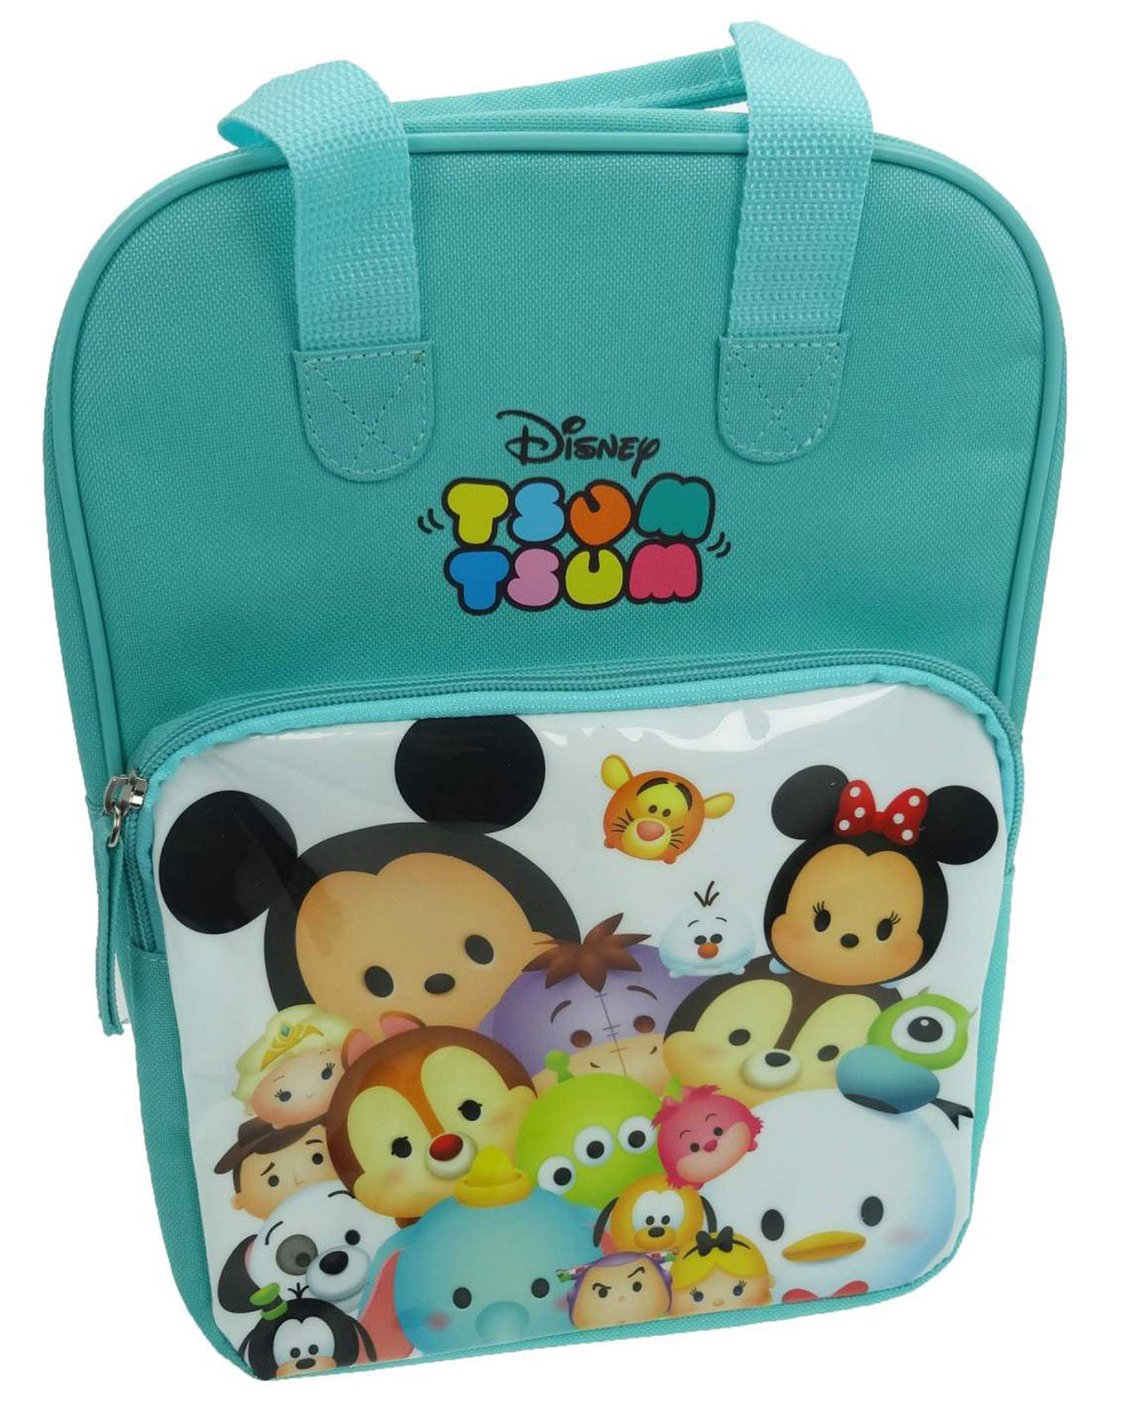 Disney Tsum 'Fashion' School Bag Rucksack Backpack